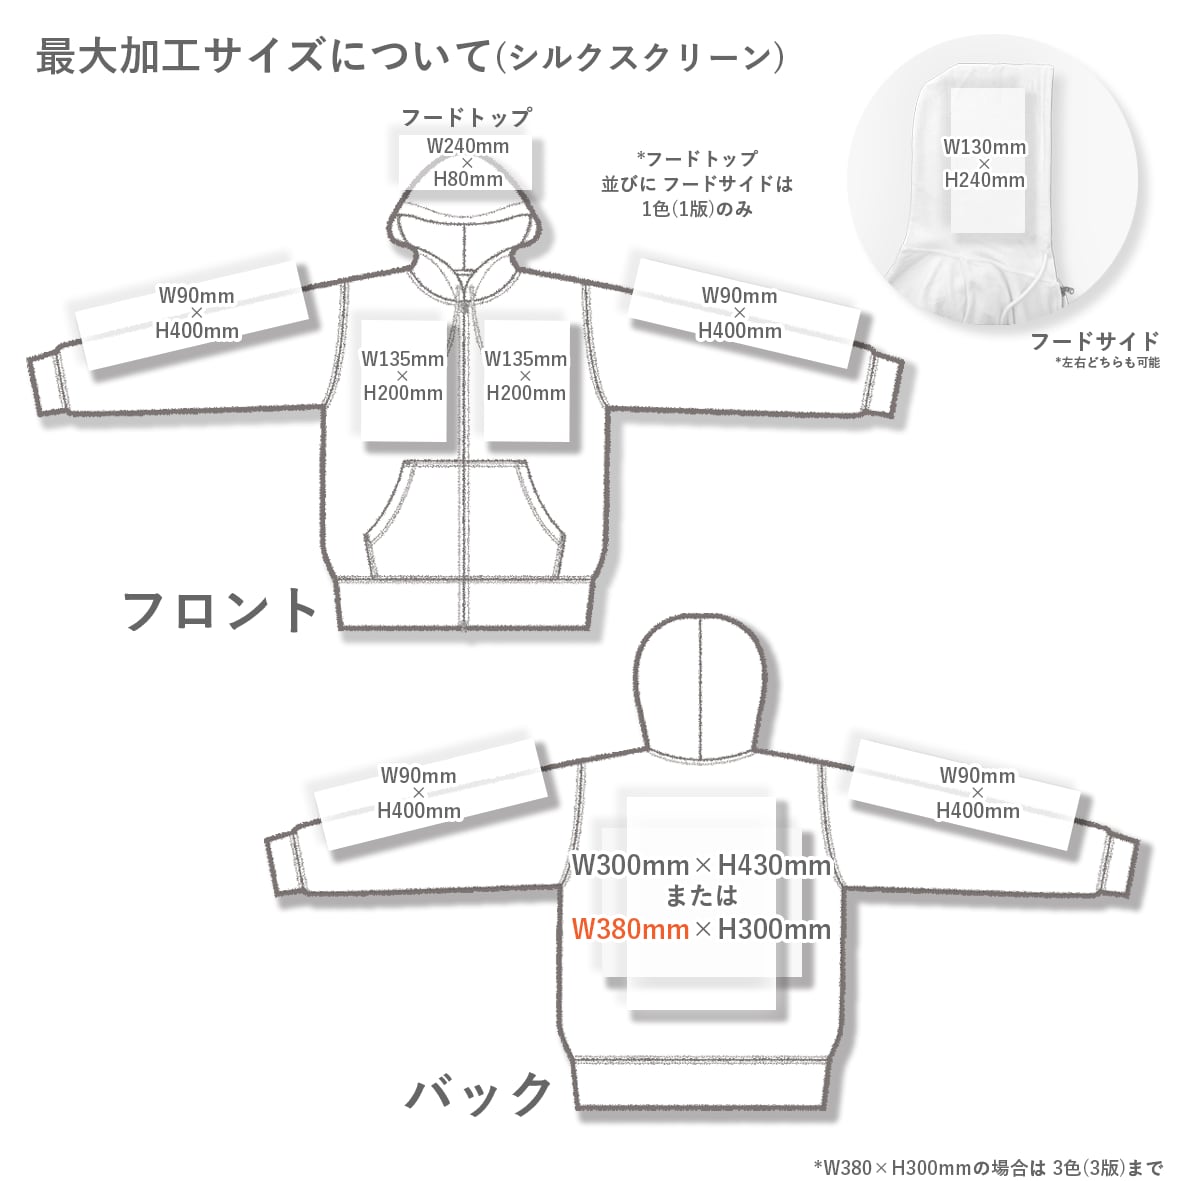 SHAKA WEAR シャカウェア Garment Dye Double Zipper Hoodie (品番SWGDDH01)